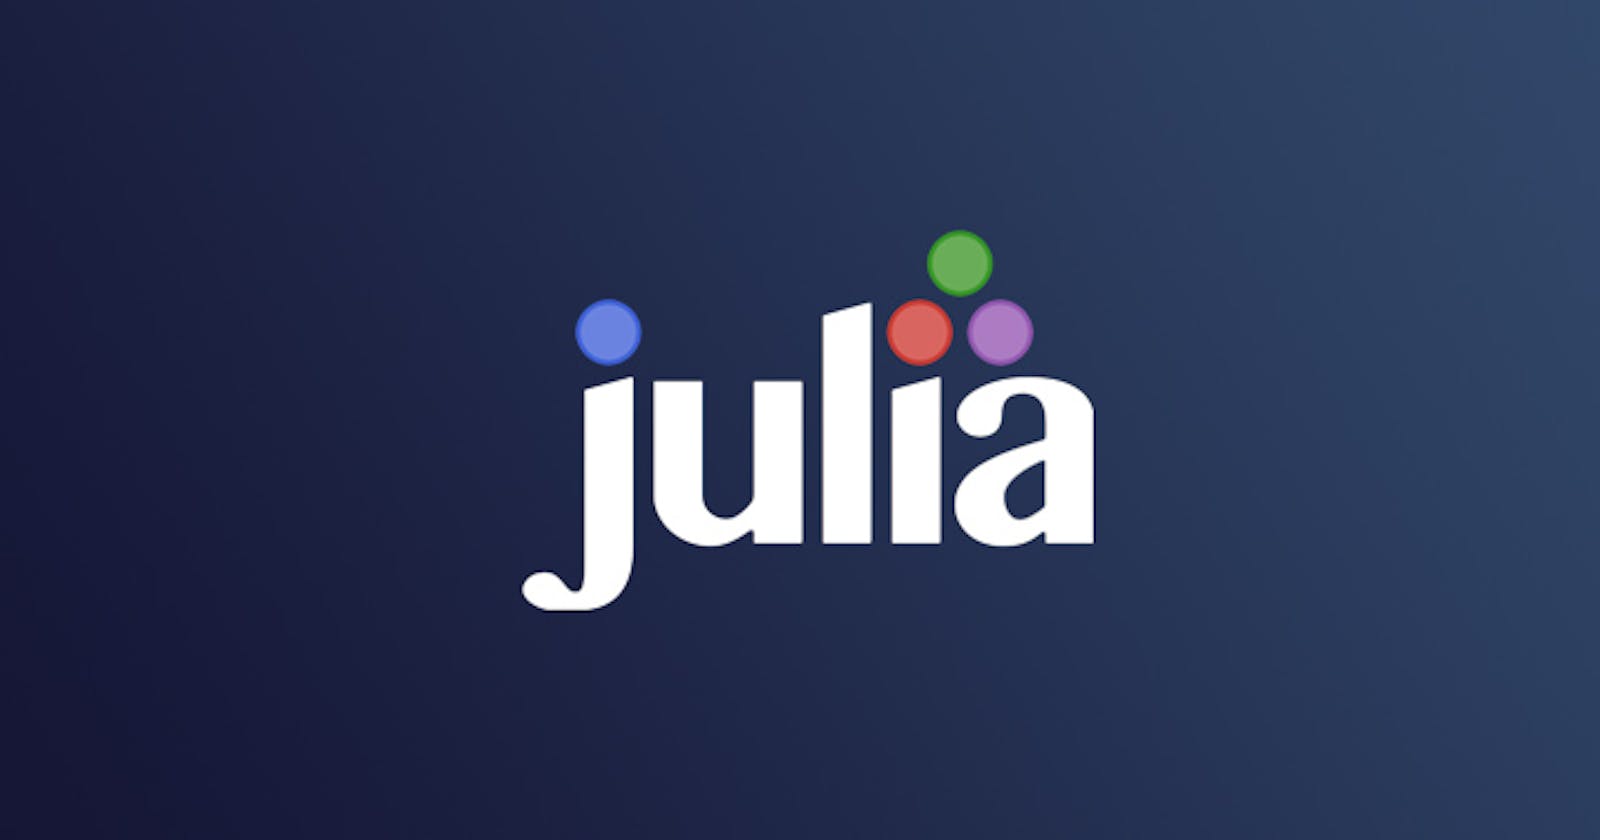 Upgrading Julia